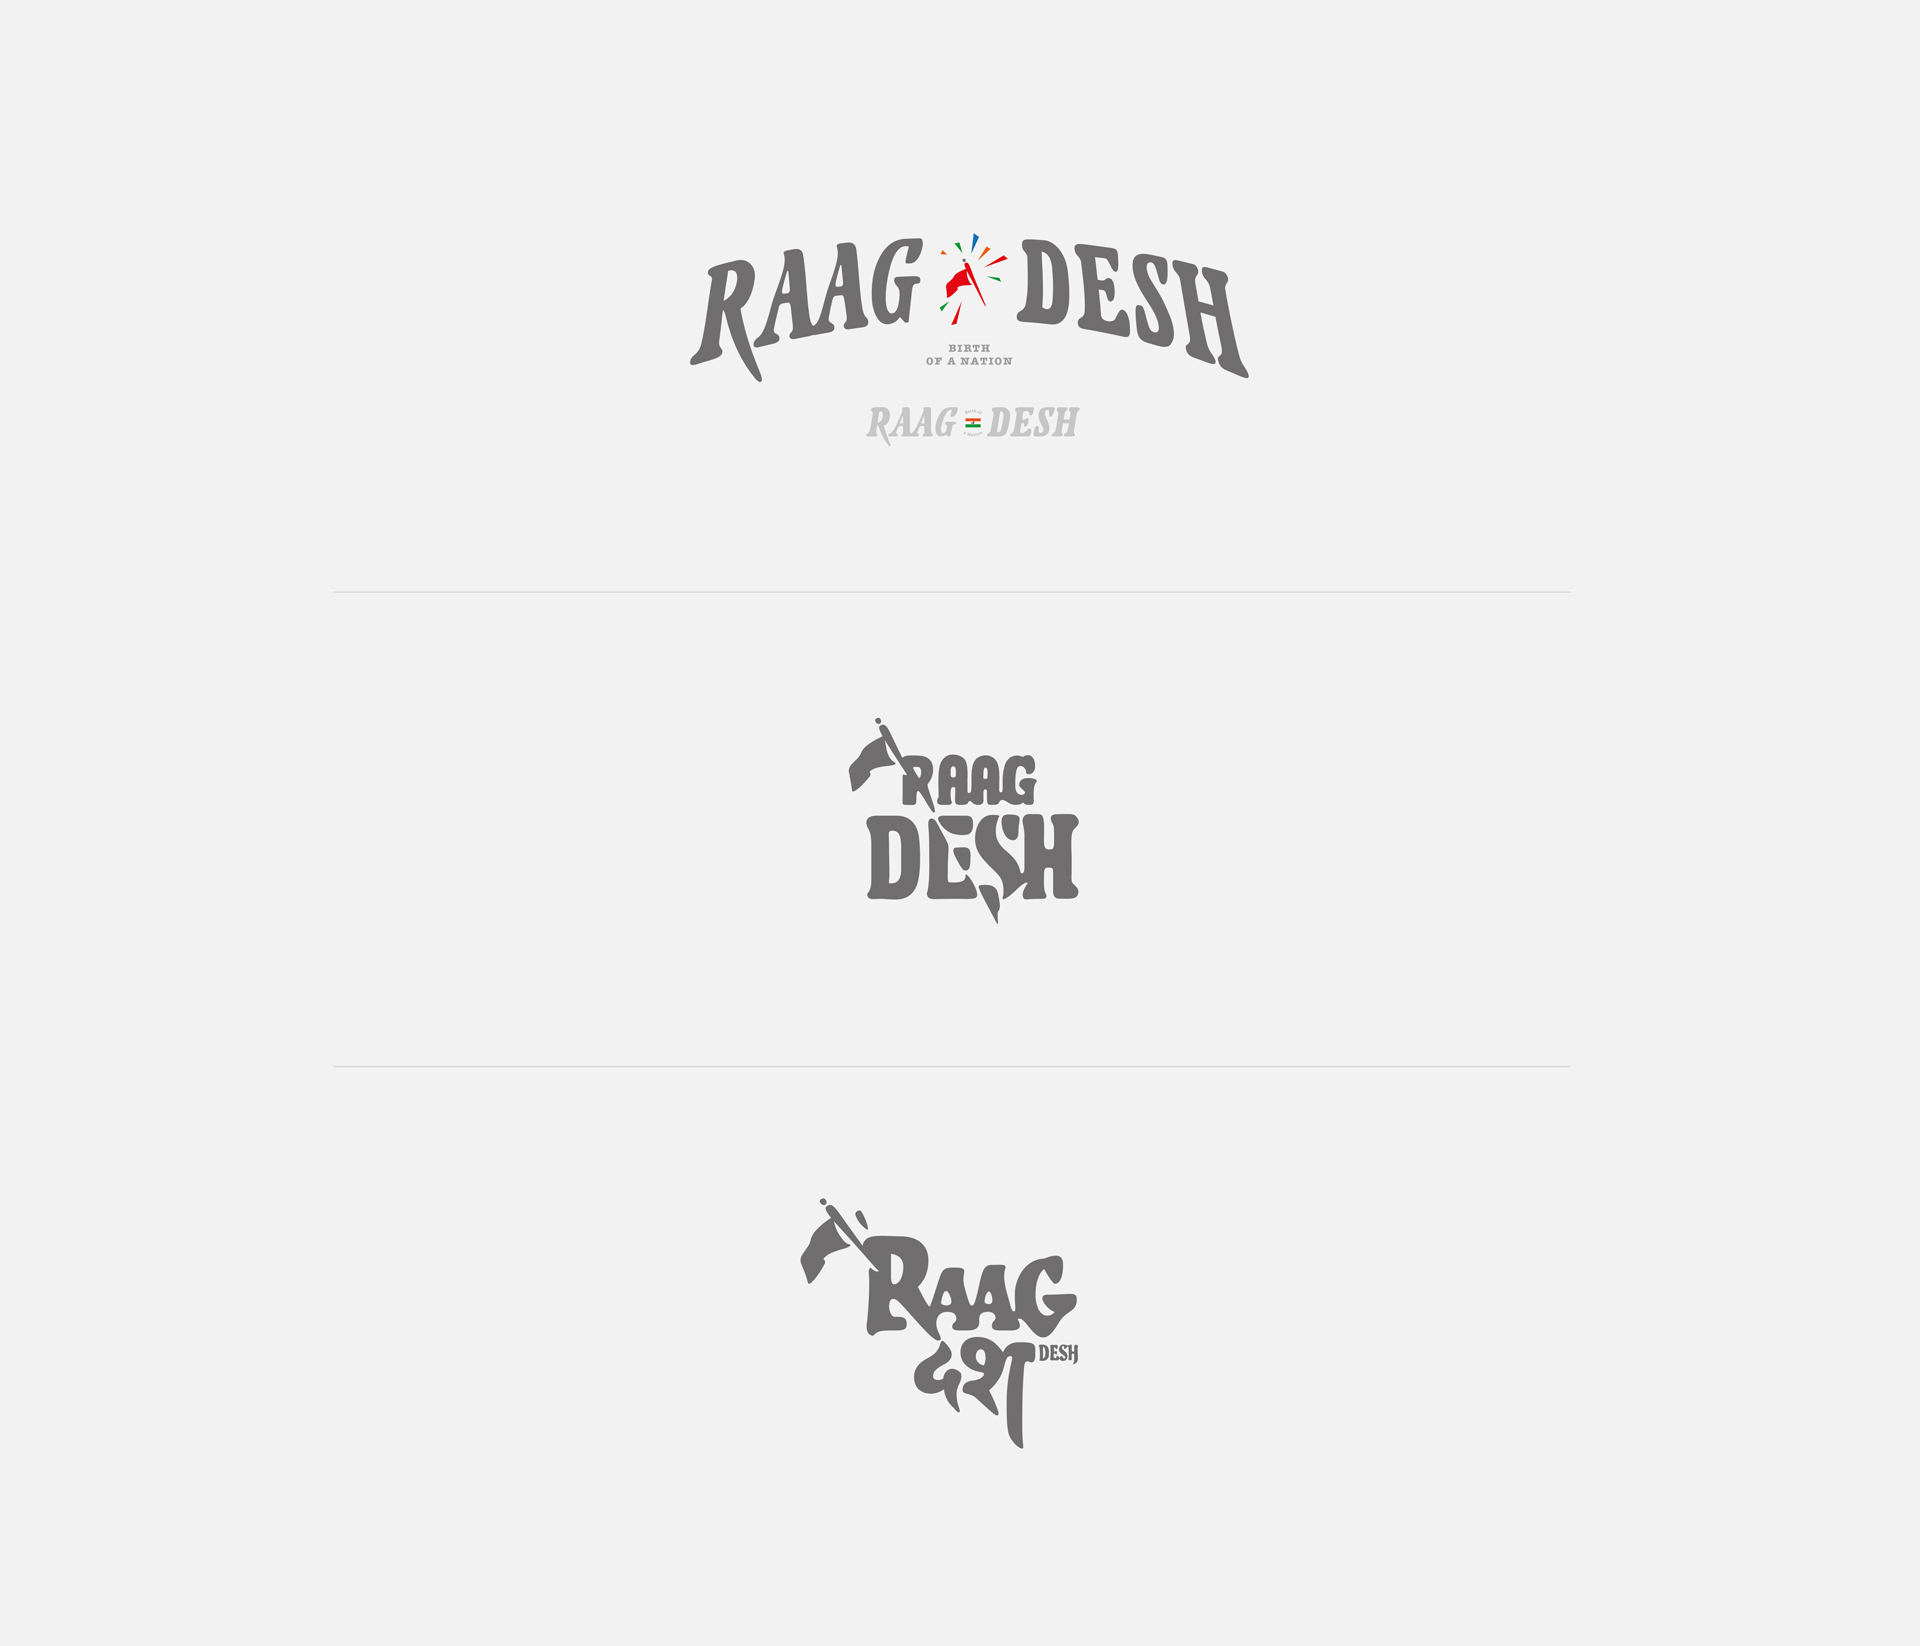 RaagDesh Bollywood Movie - Identity Design - Logotype process